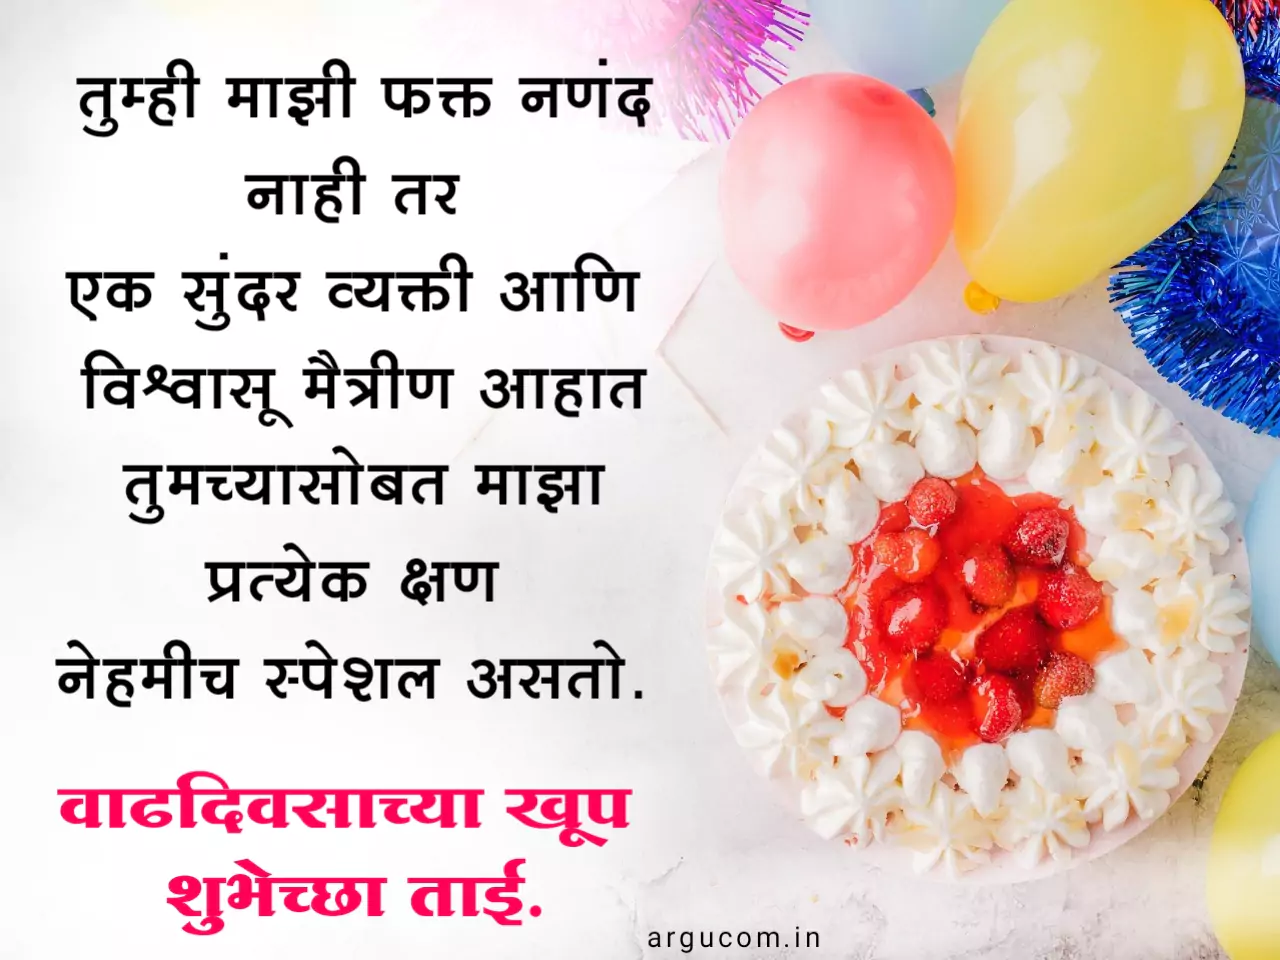 Happy Birthday wishes for nanad in marathi